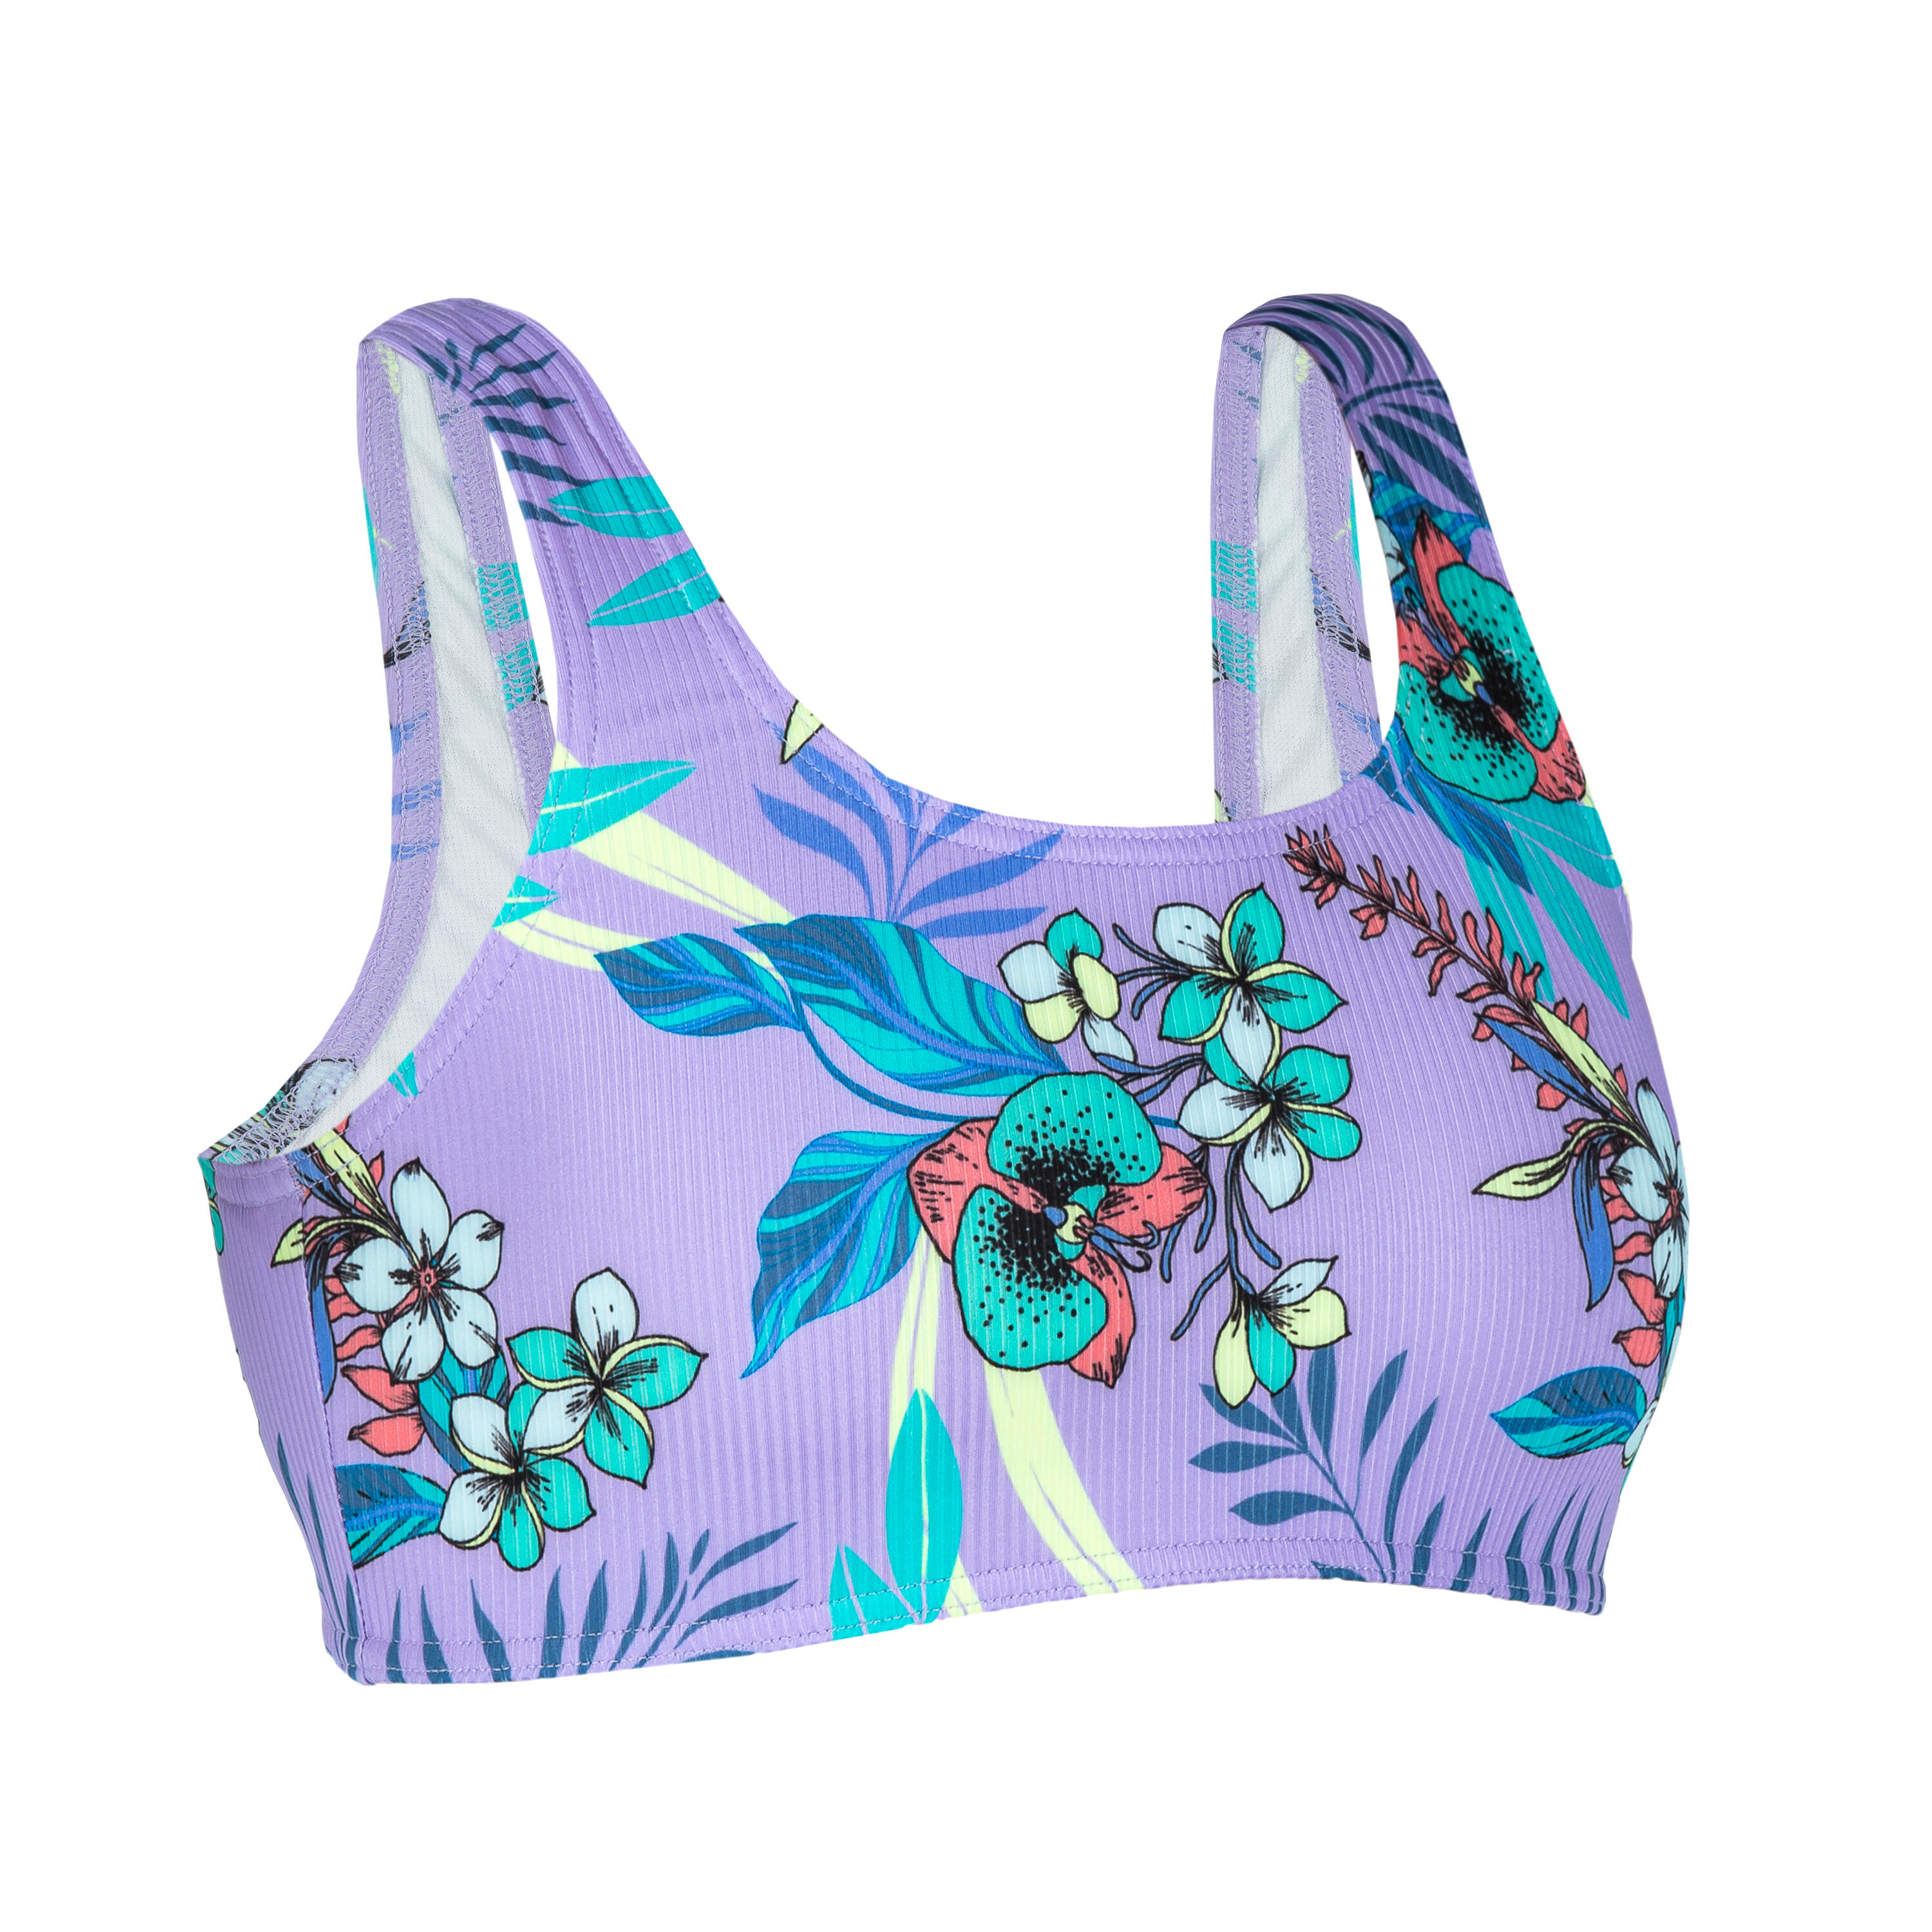 OLAIAN Girl's textured swimsuit bra top - 500 Lana orchid purple